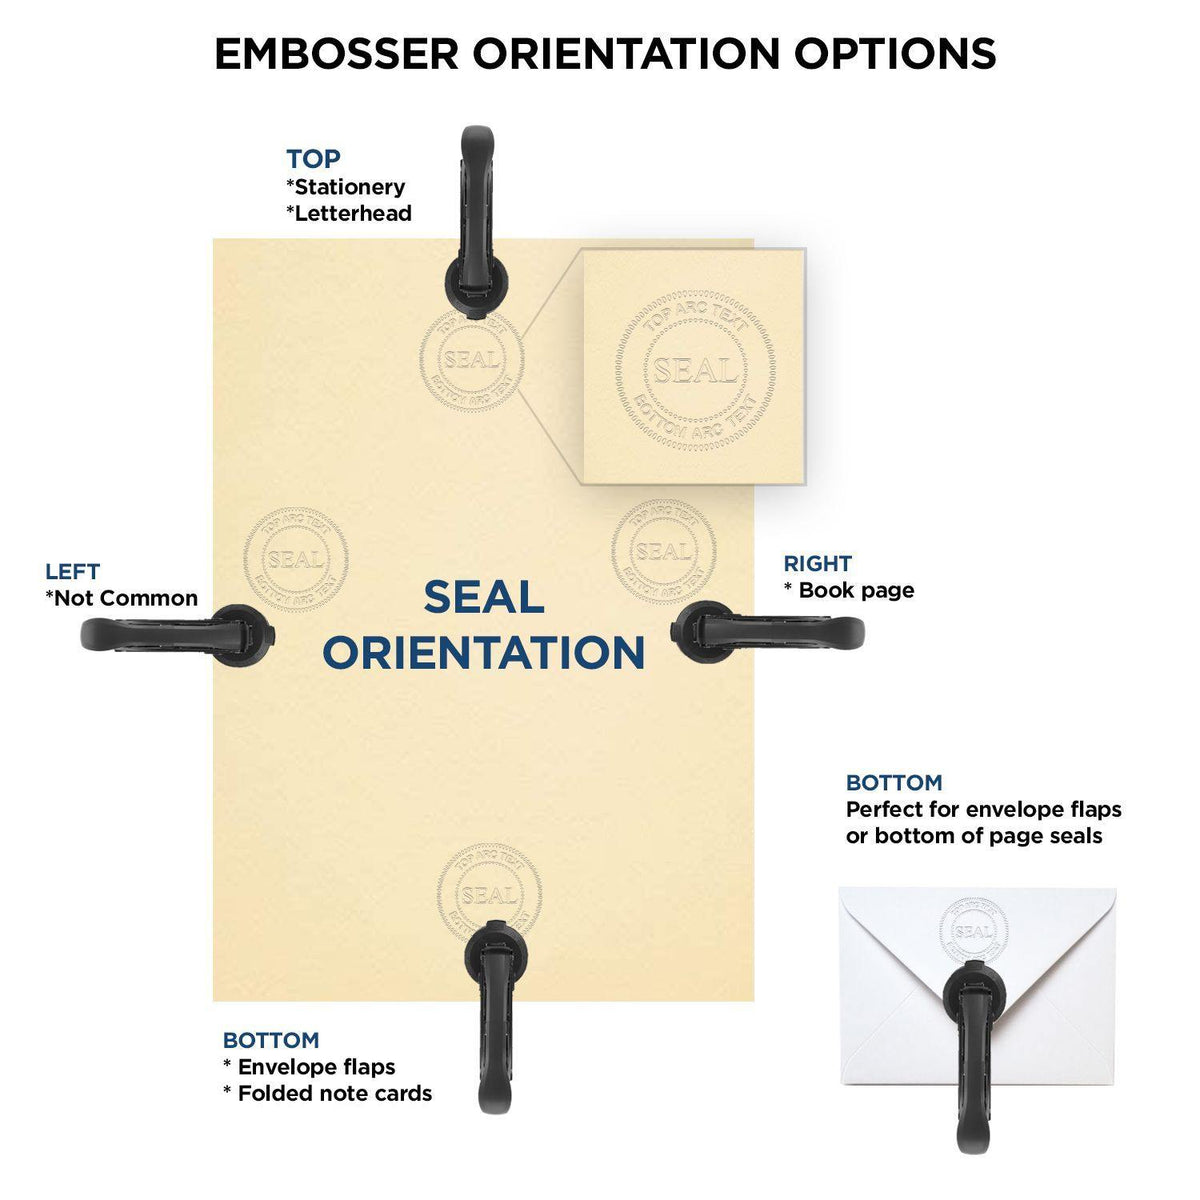 Geologist Extended Long Reach Desk Seal Embosser - Engineer Seal Stamps - Embosser Type_Desk, Embosser Type_Extended Long Reach, Type of Use_Professional, Use_Heavy Duty, validate-product-description